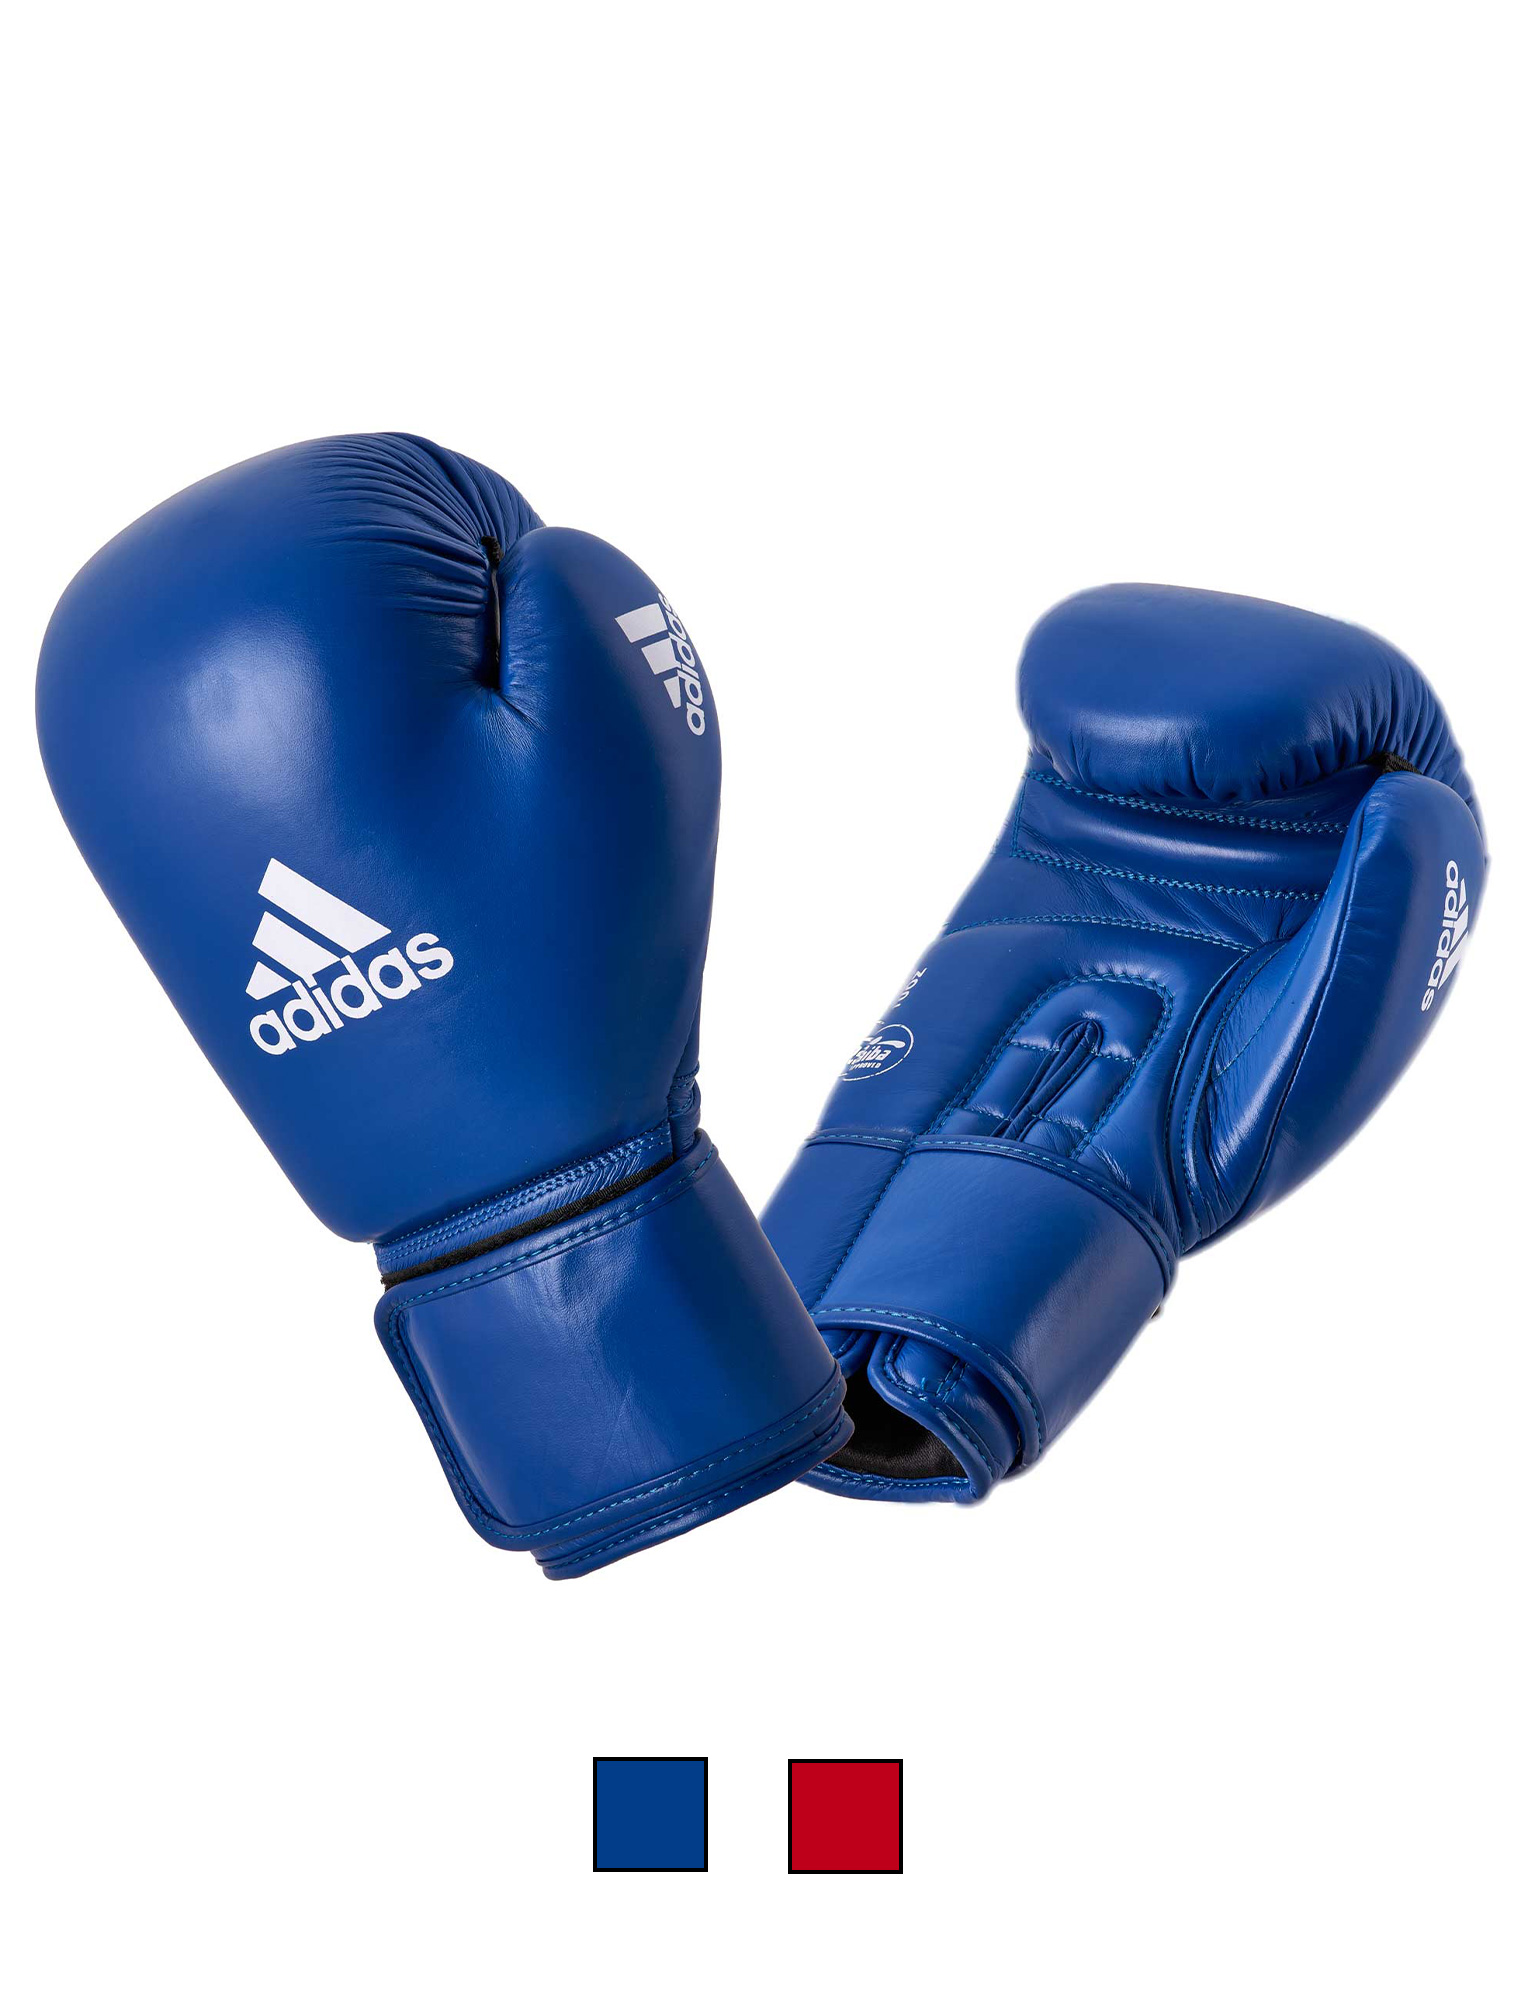 adidas boxing glove AIBAG1, blue